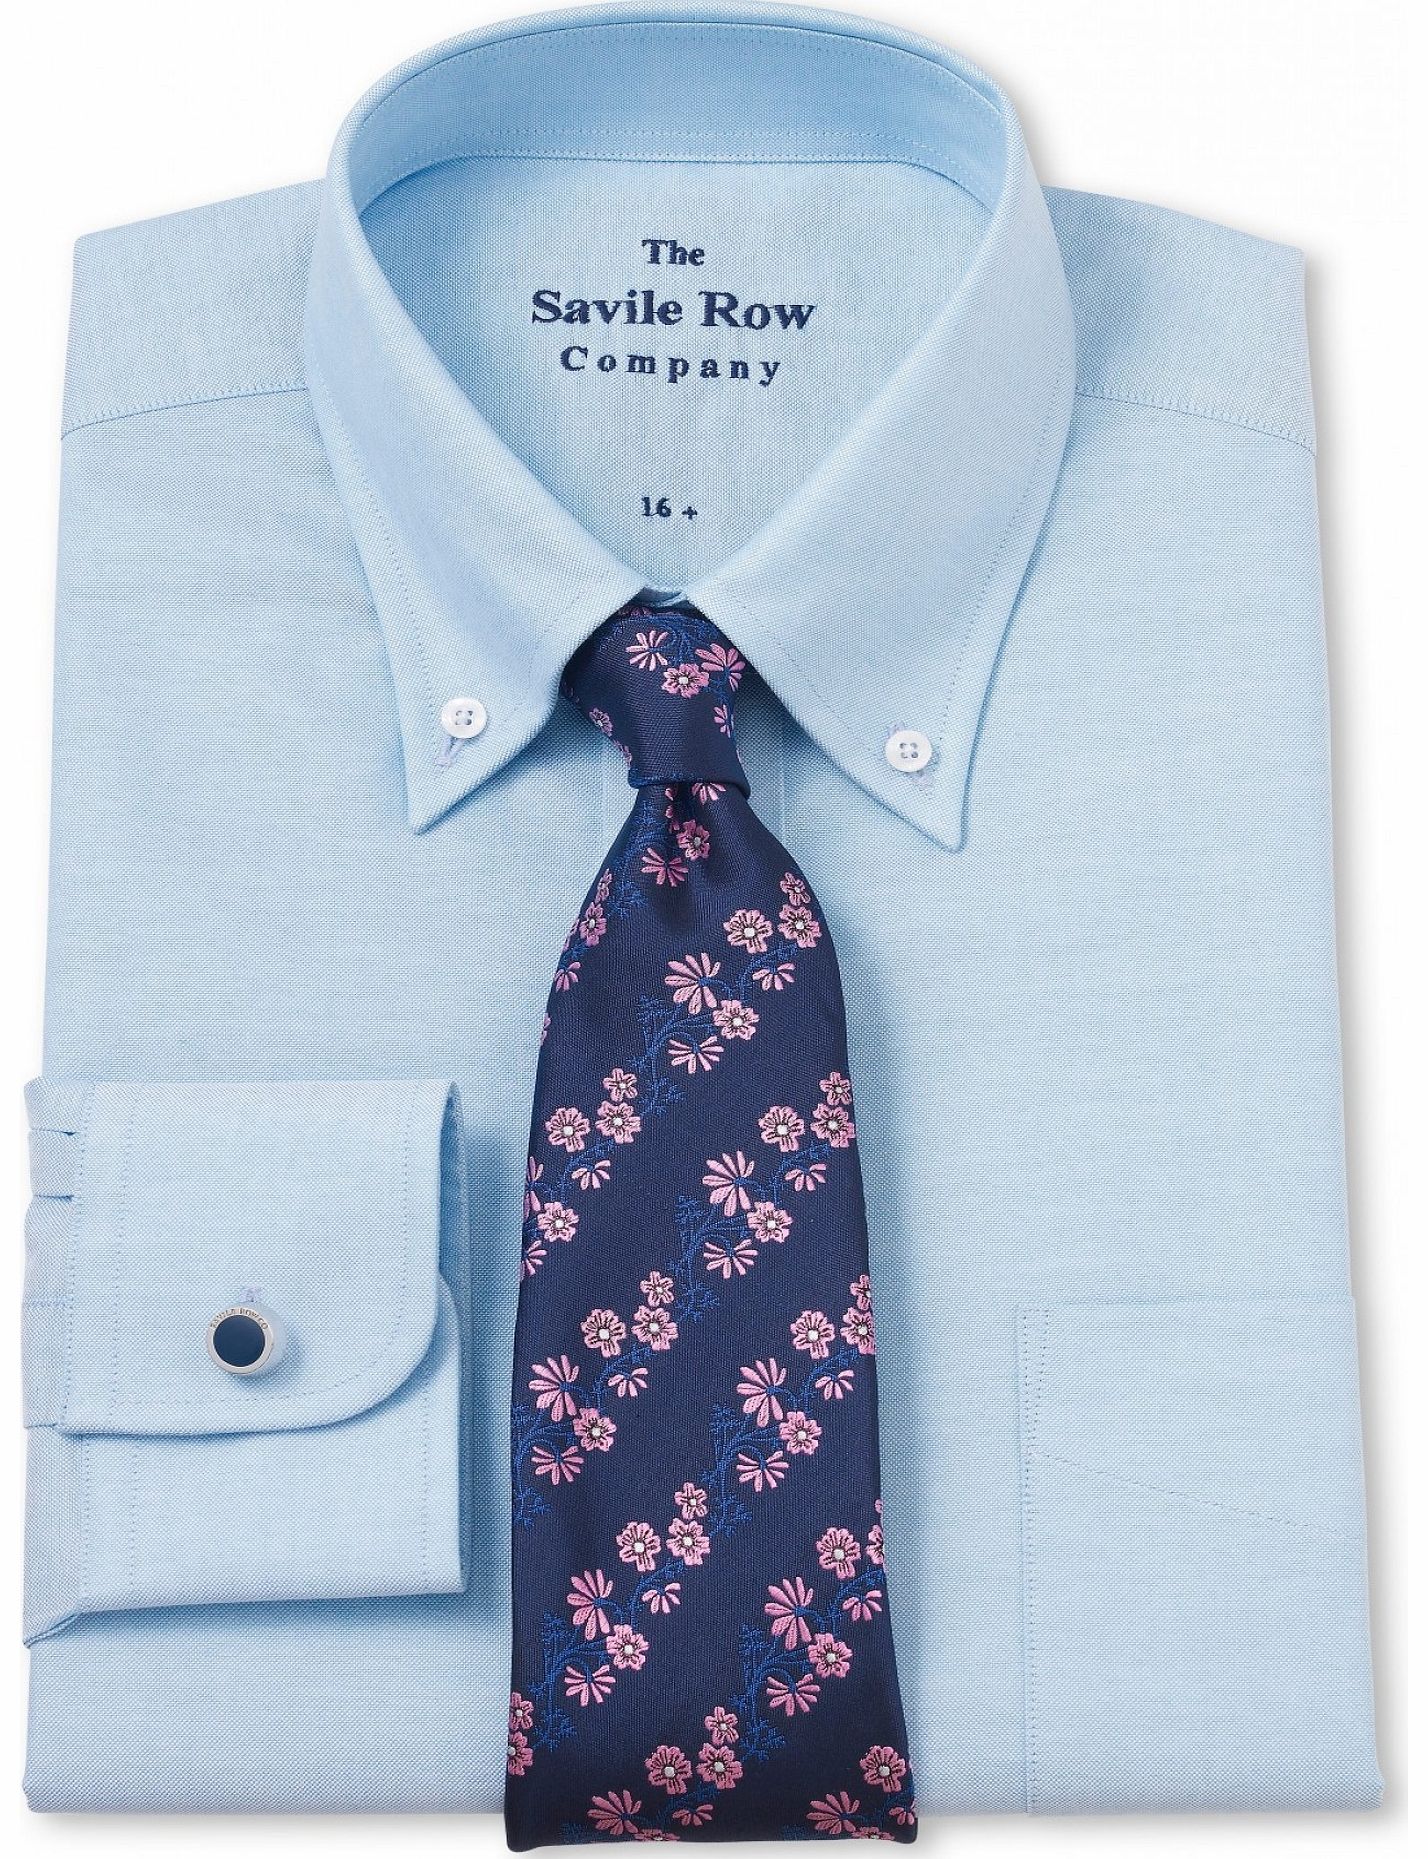 Savile Row Company Blue Oxford Button Down Classic Shirt 16 1/2``